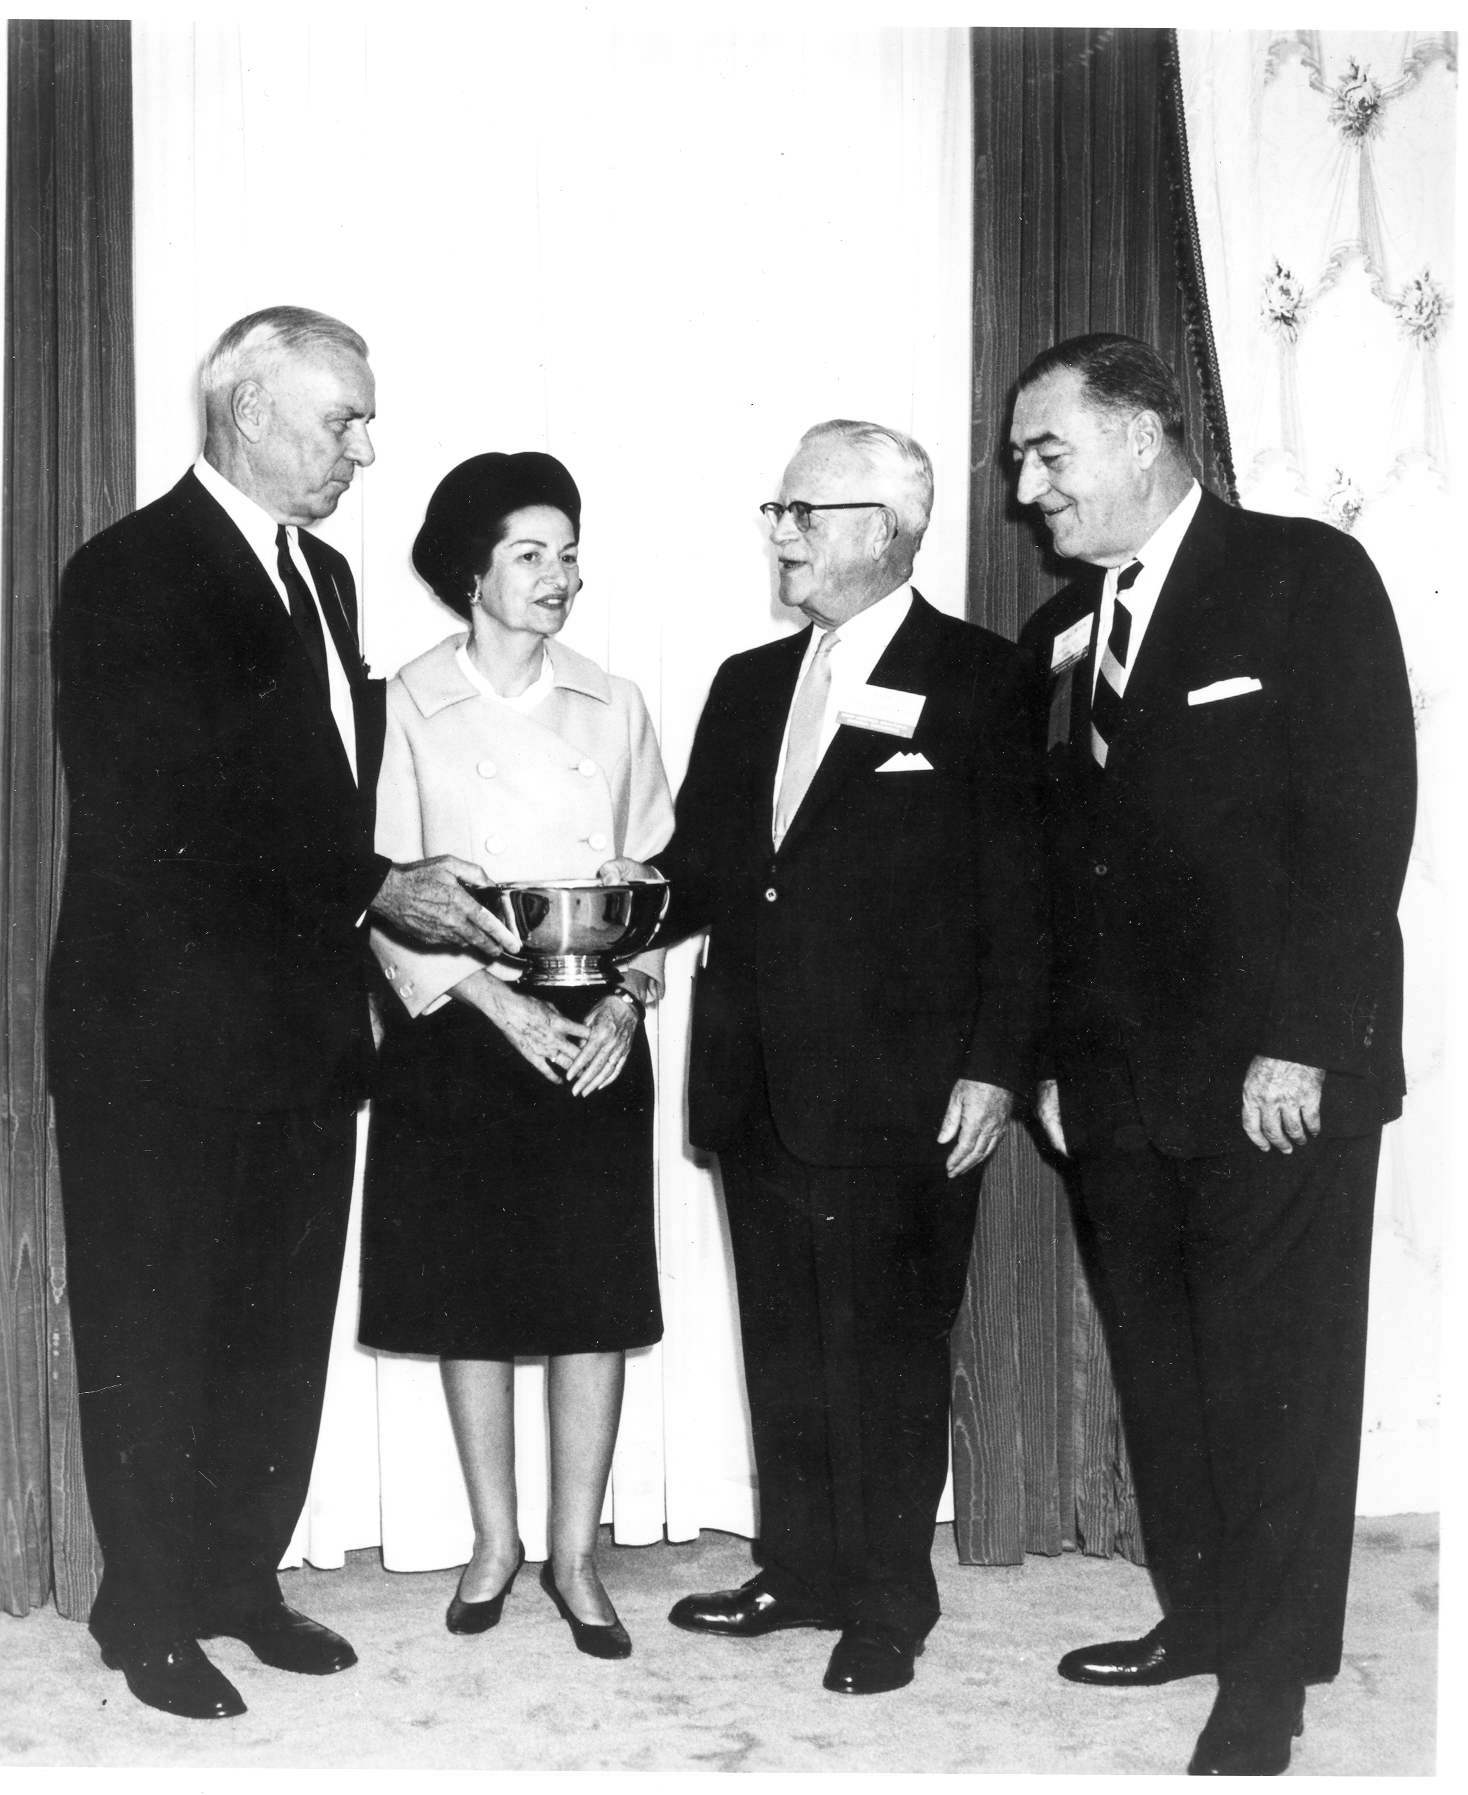 Ladybird Johnson presents a Keep America Beautiful Award to Owens-Illinois in 1965